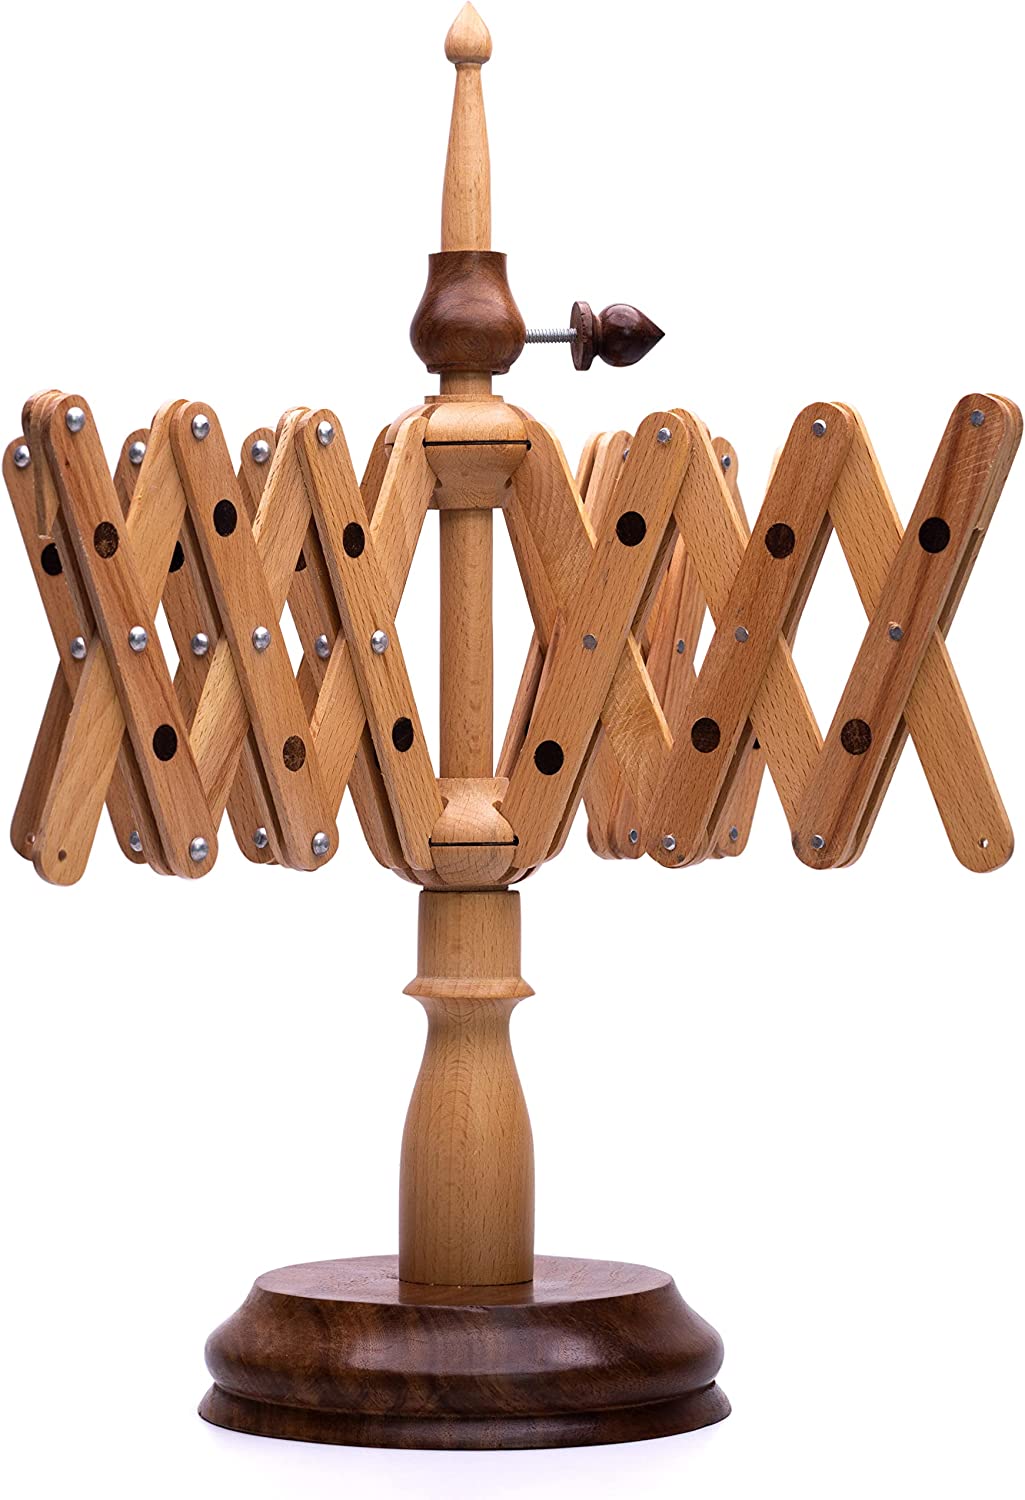  XL Nagina International's Yarn Swift Umbrella Table Top Yarn  Winder